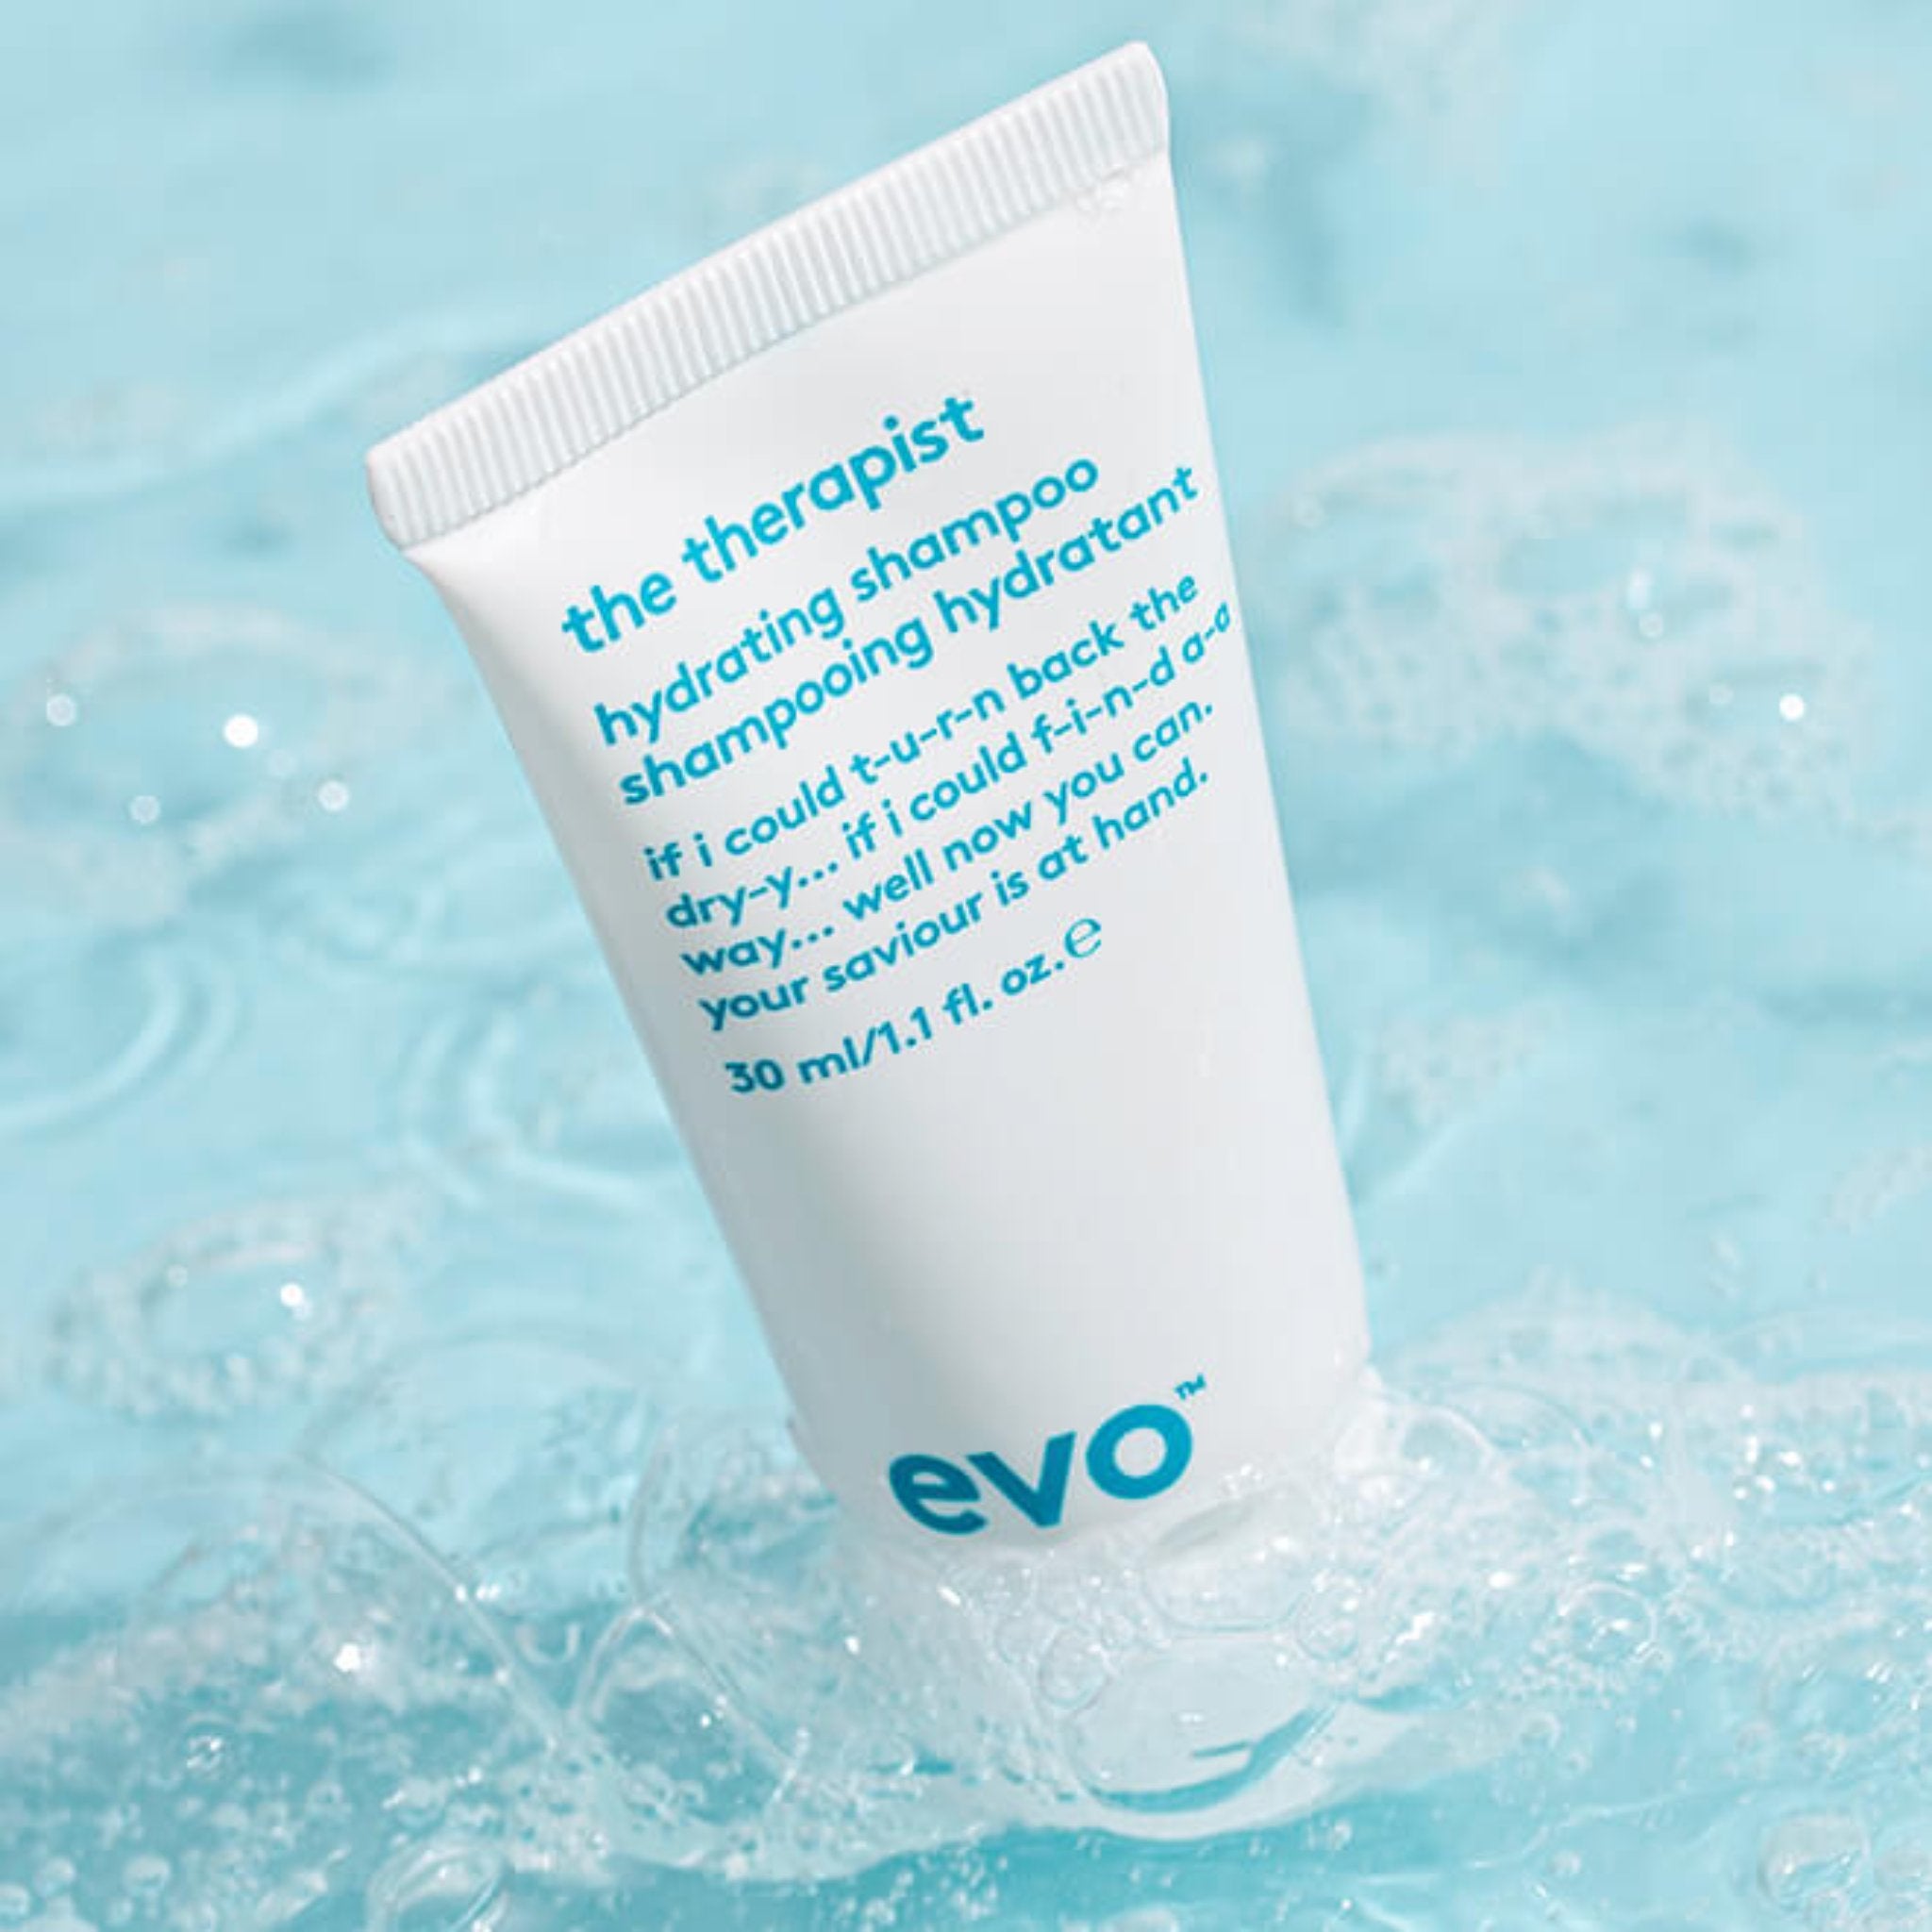 Evo. The Therapist Shampoing Hydratant - 30 ml - Concept C. Shop